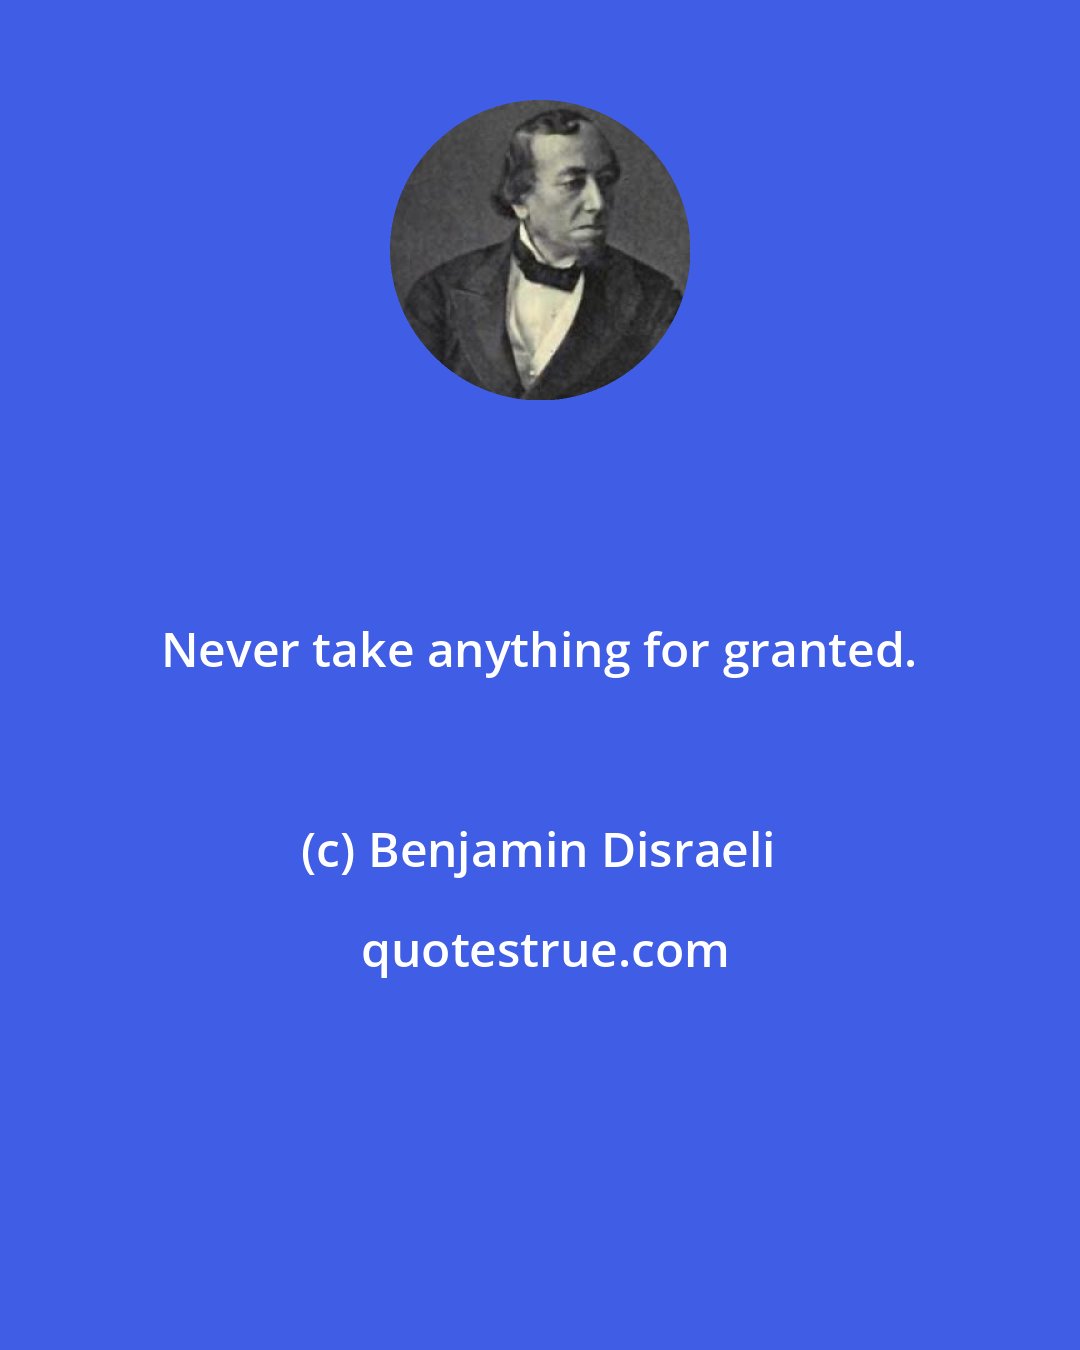 Benjamin Disraeli: Never take anything for granted.